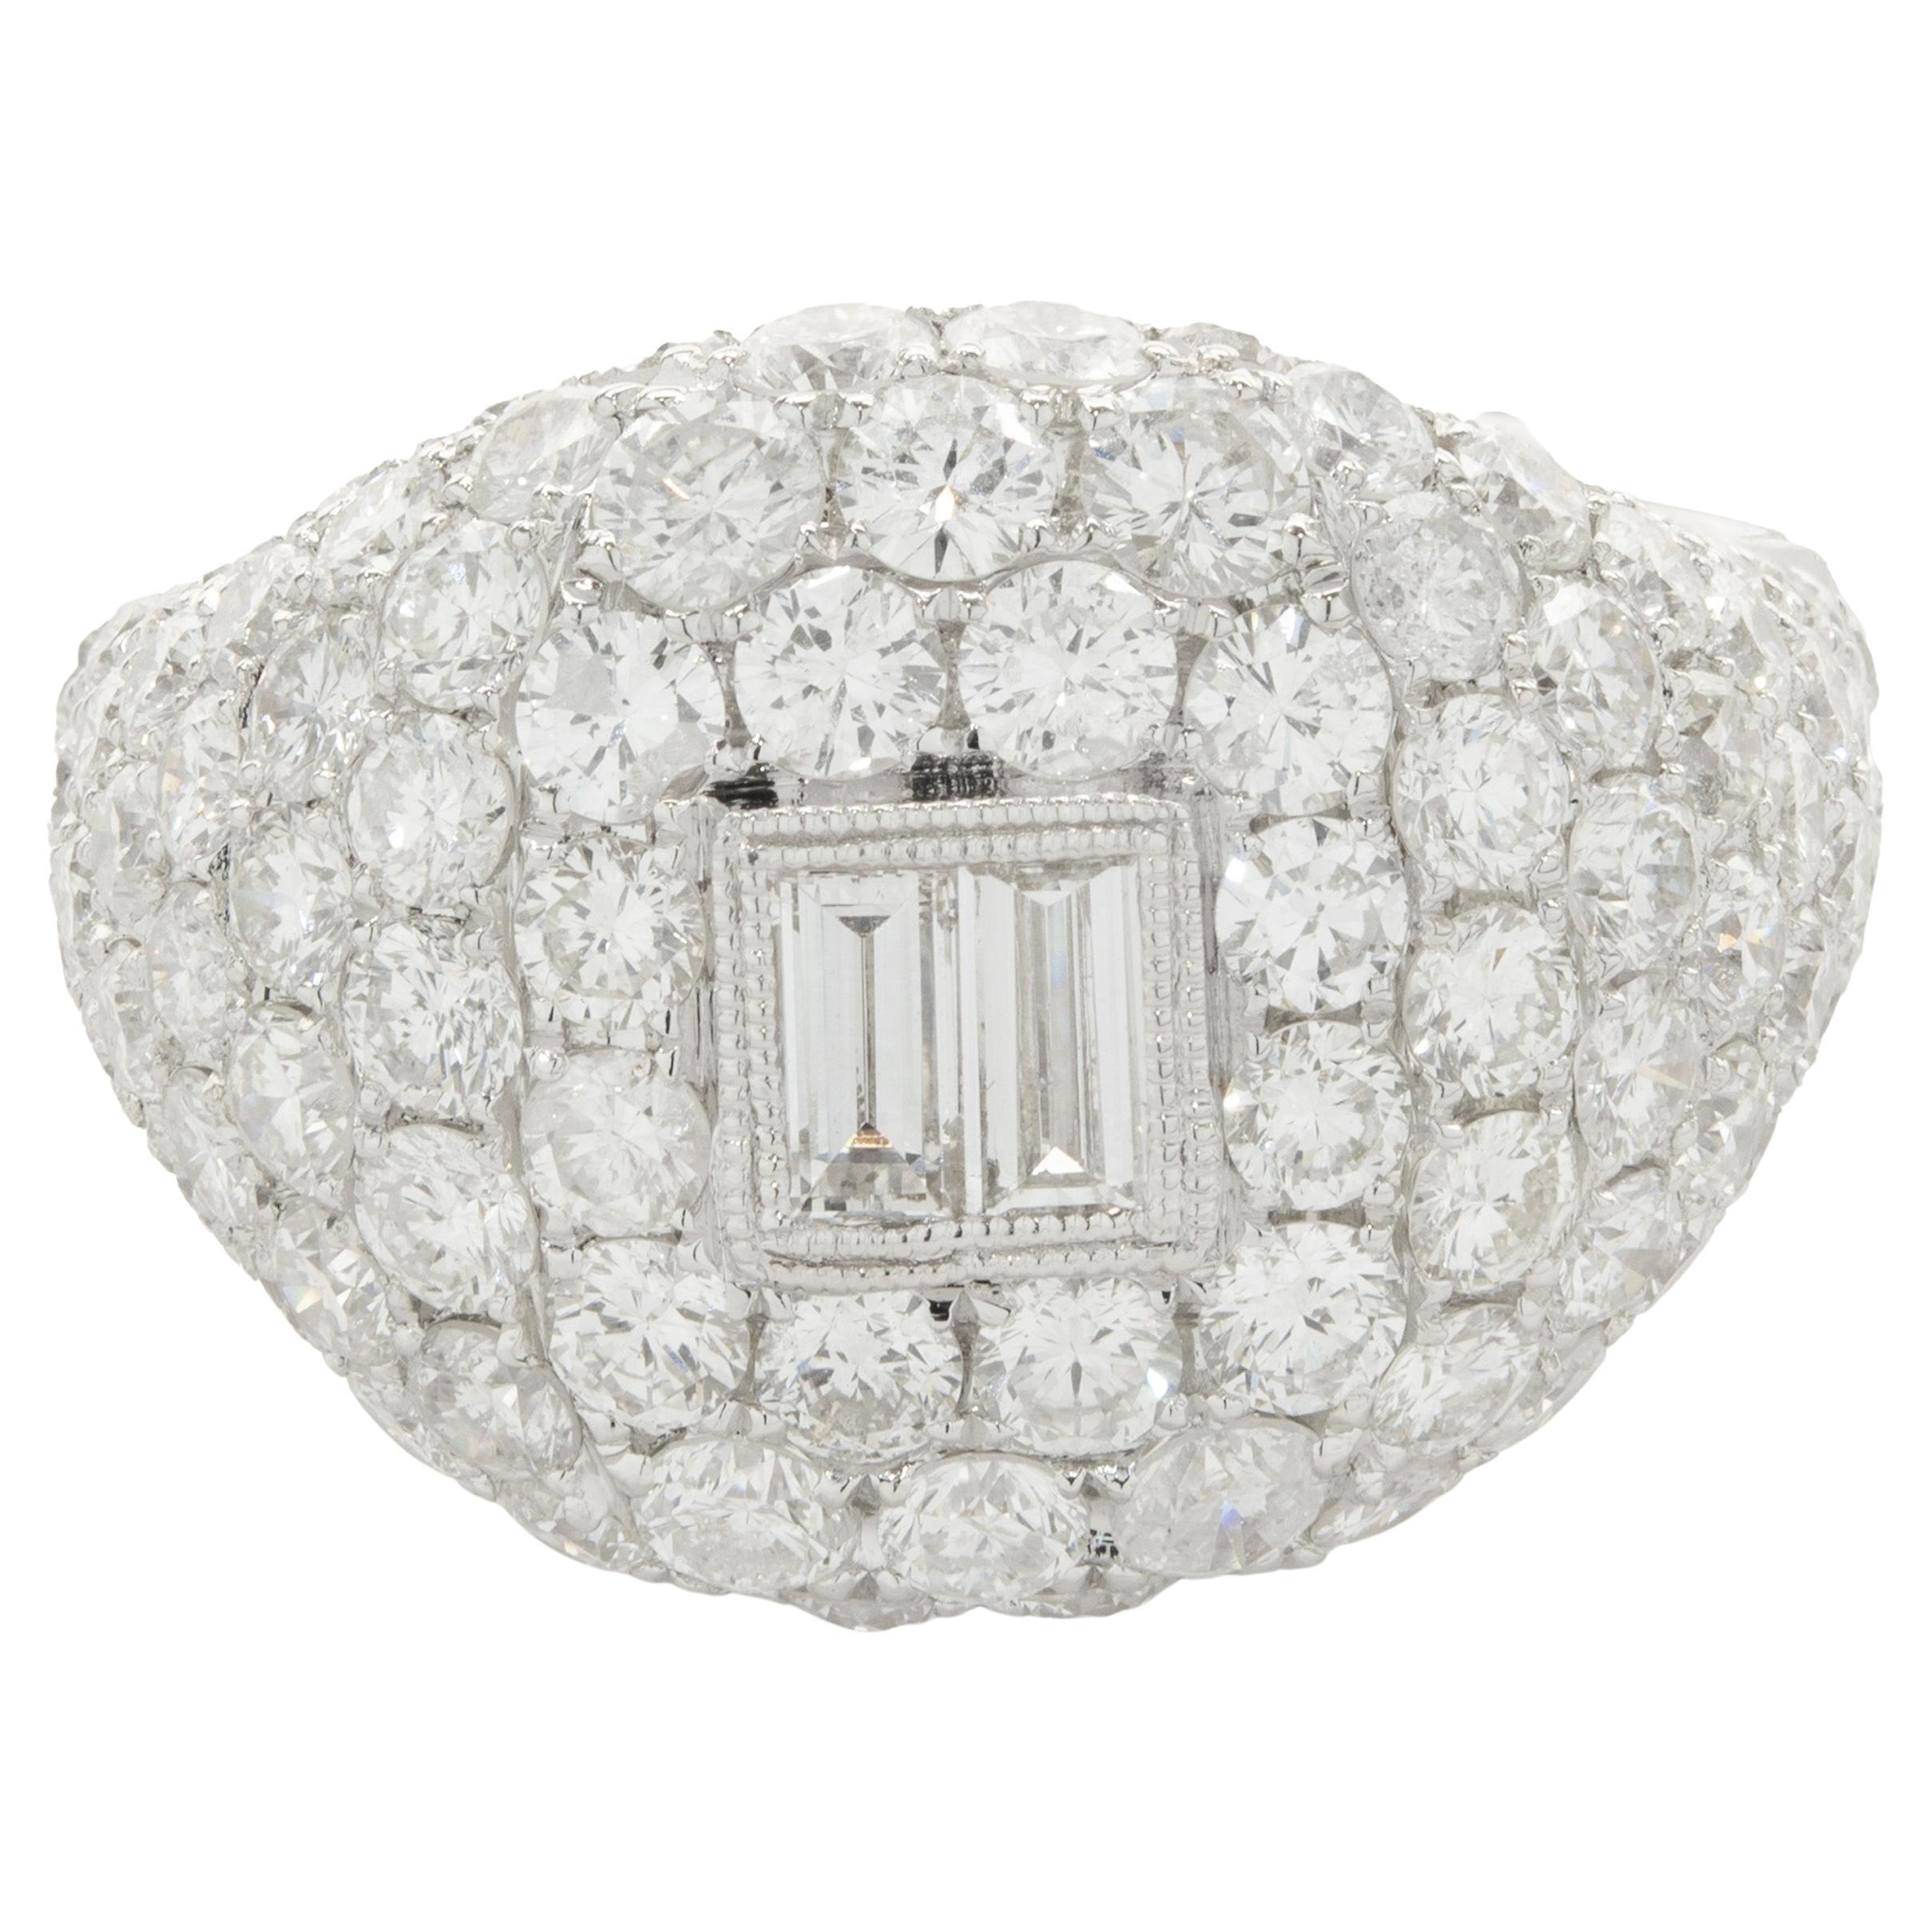 18 Karat White Gold Pave Diamond Signet Ring with Baguette Diamond Center For Sale